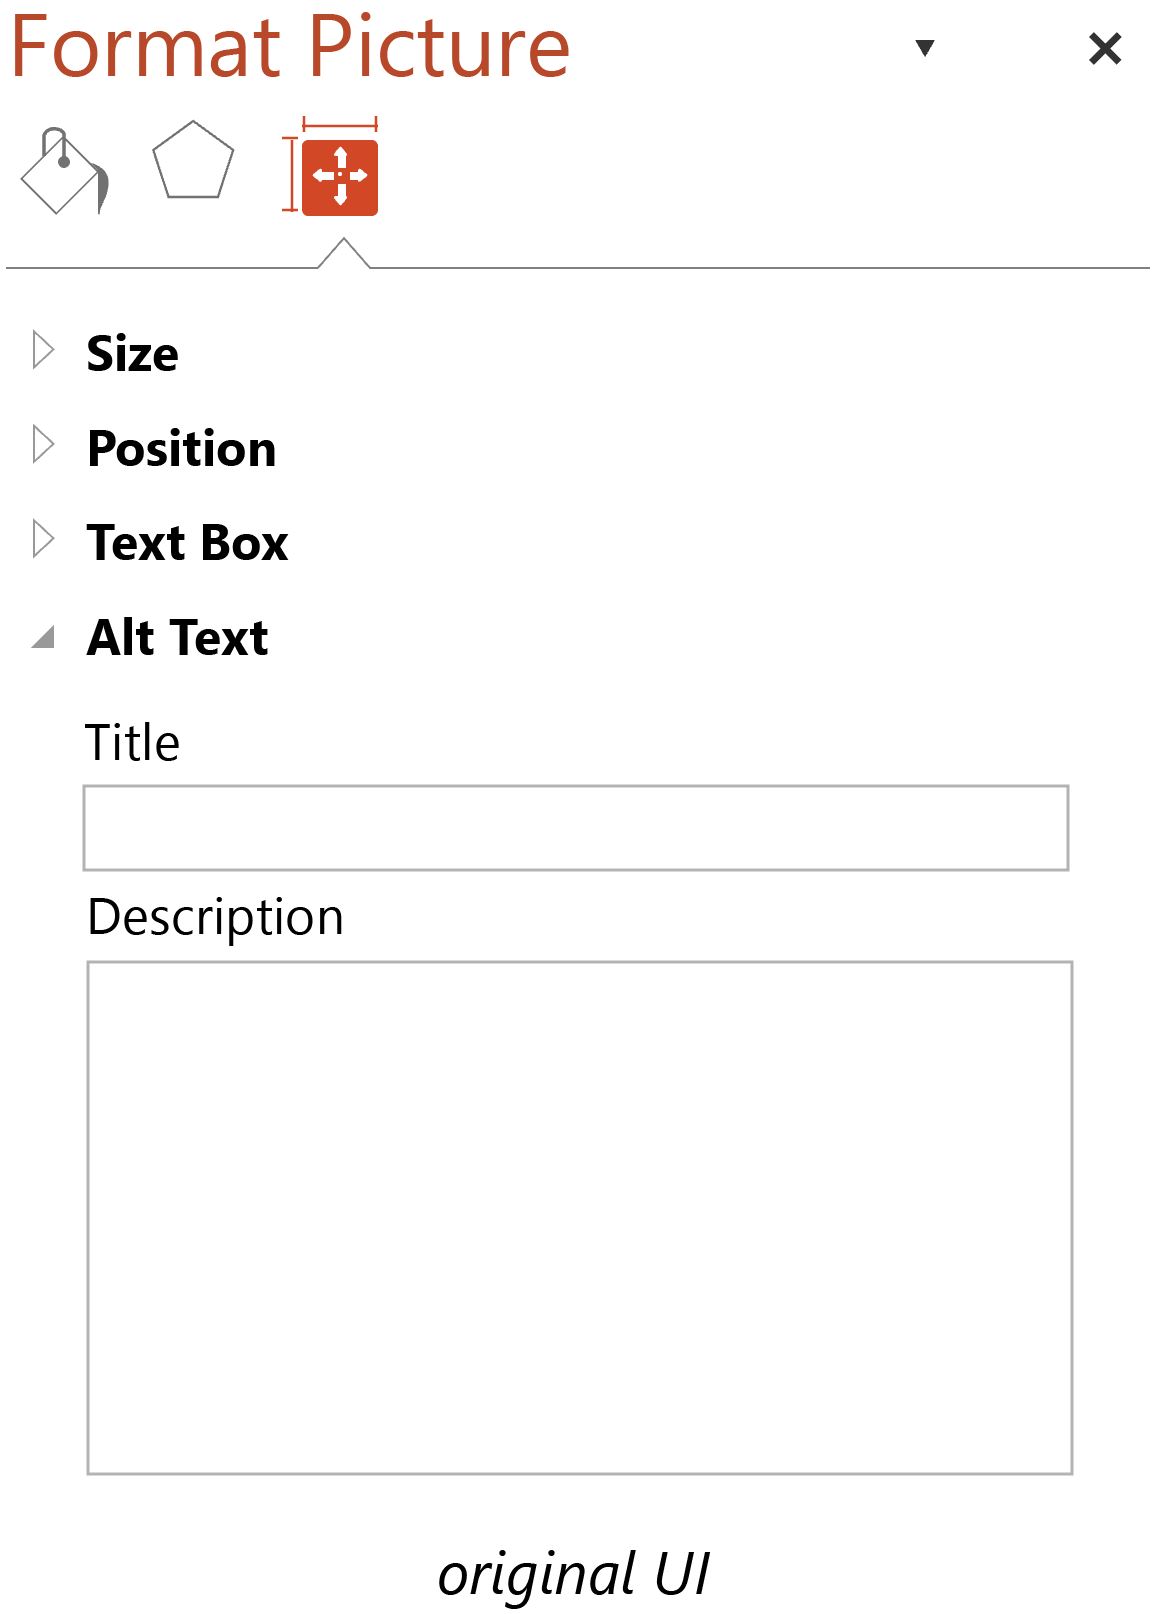 Screenshot of the original alt text UI with a title field and a description field beneath a series of menus.